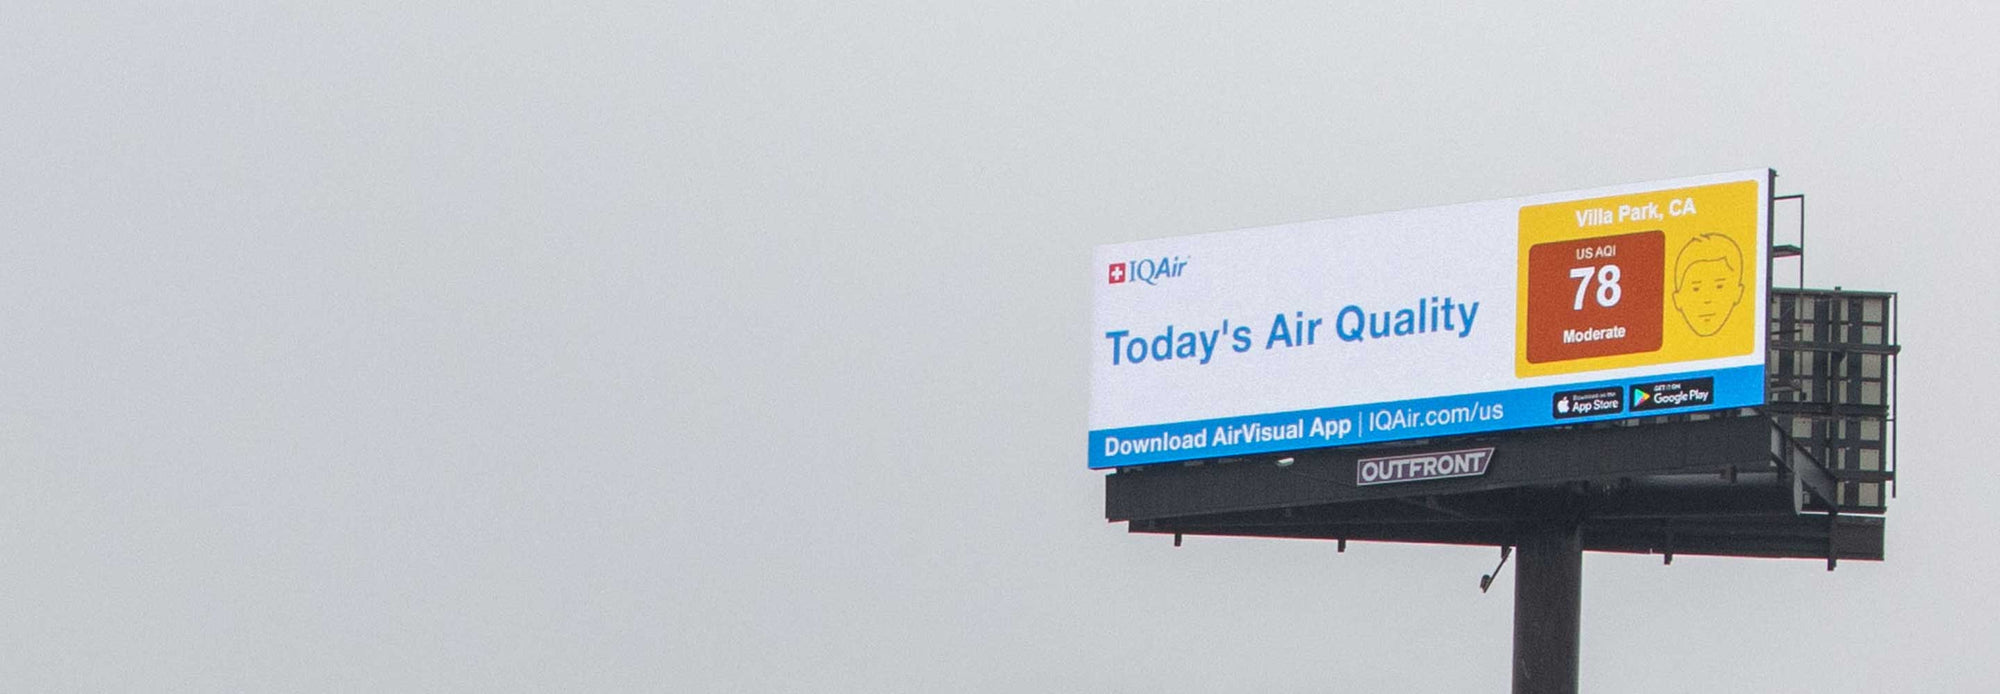 AirVisual Platform displaying on billboard